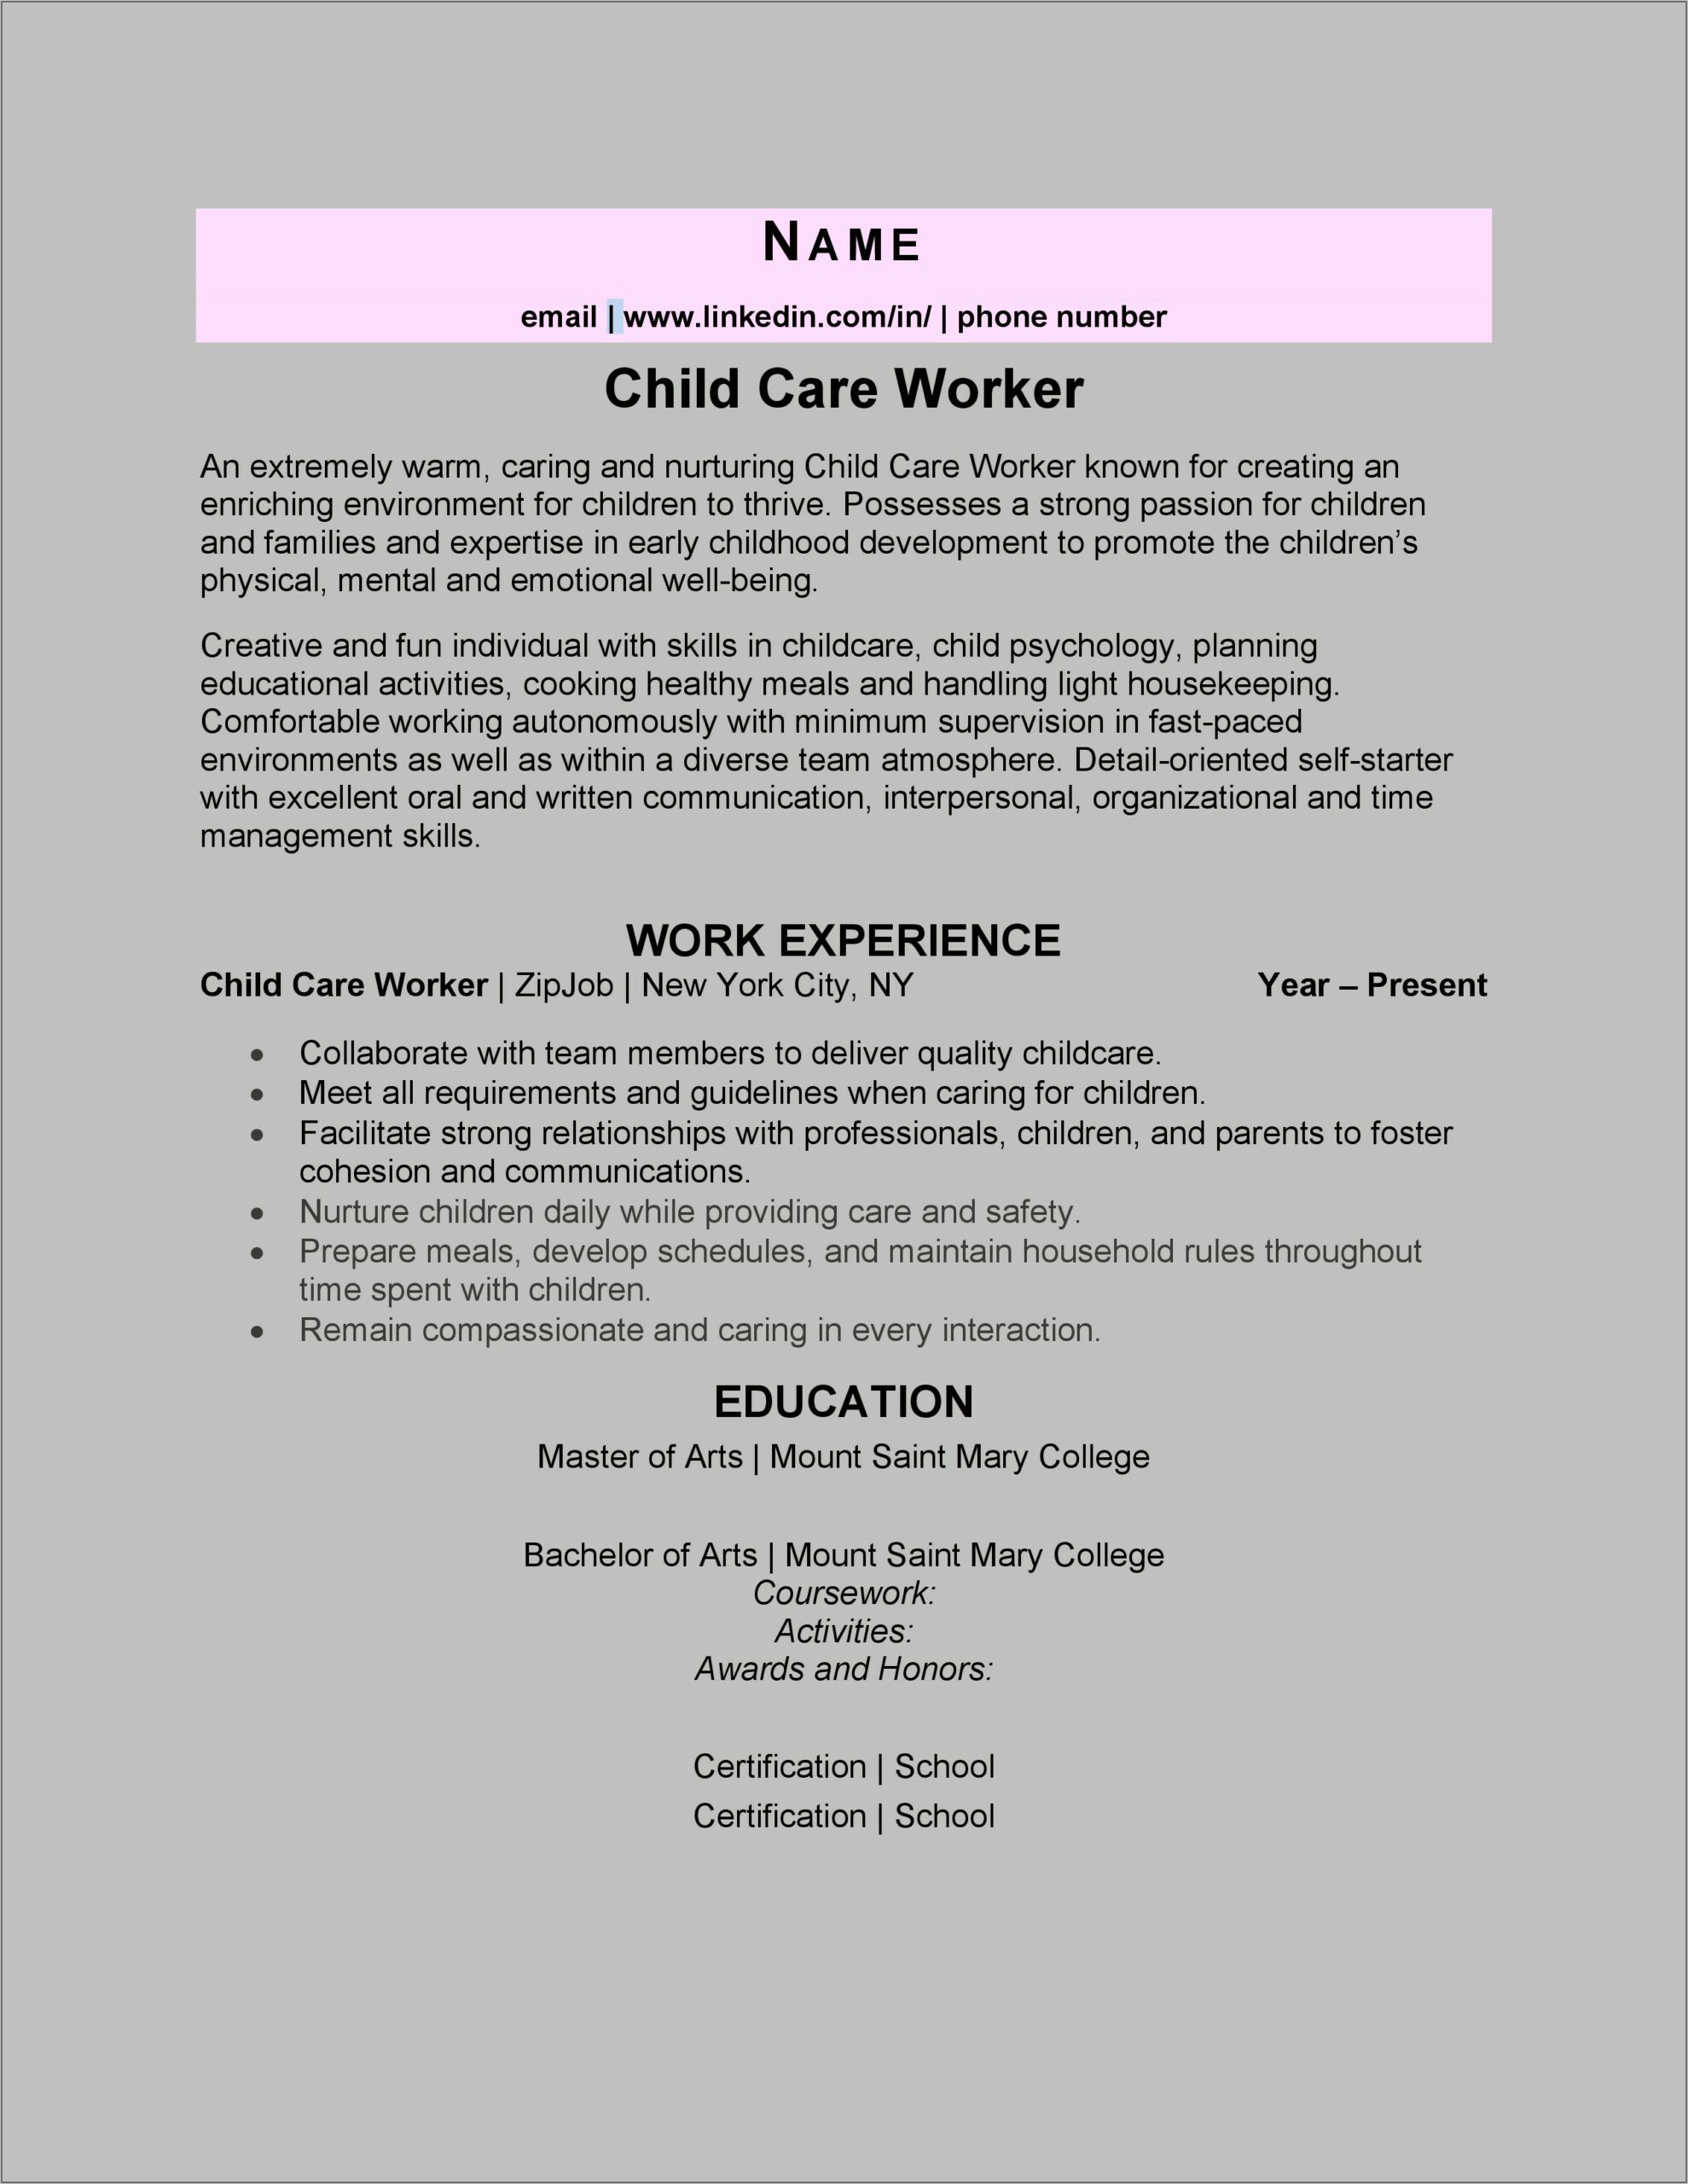 Child Care Provider Resume Objective